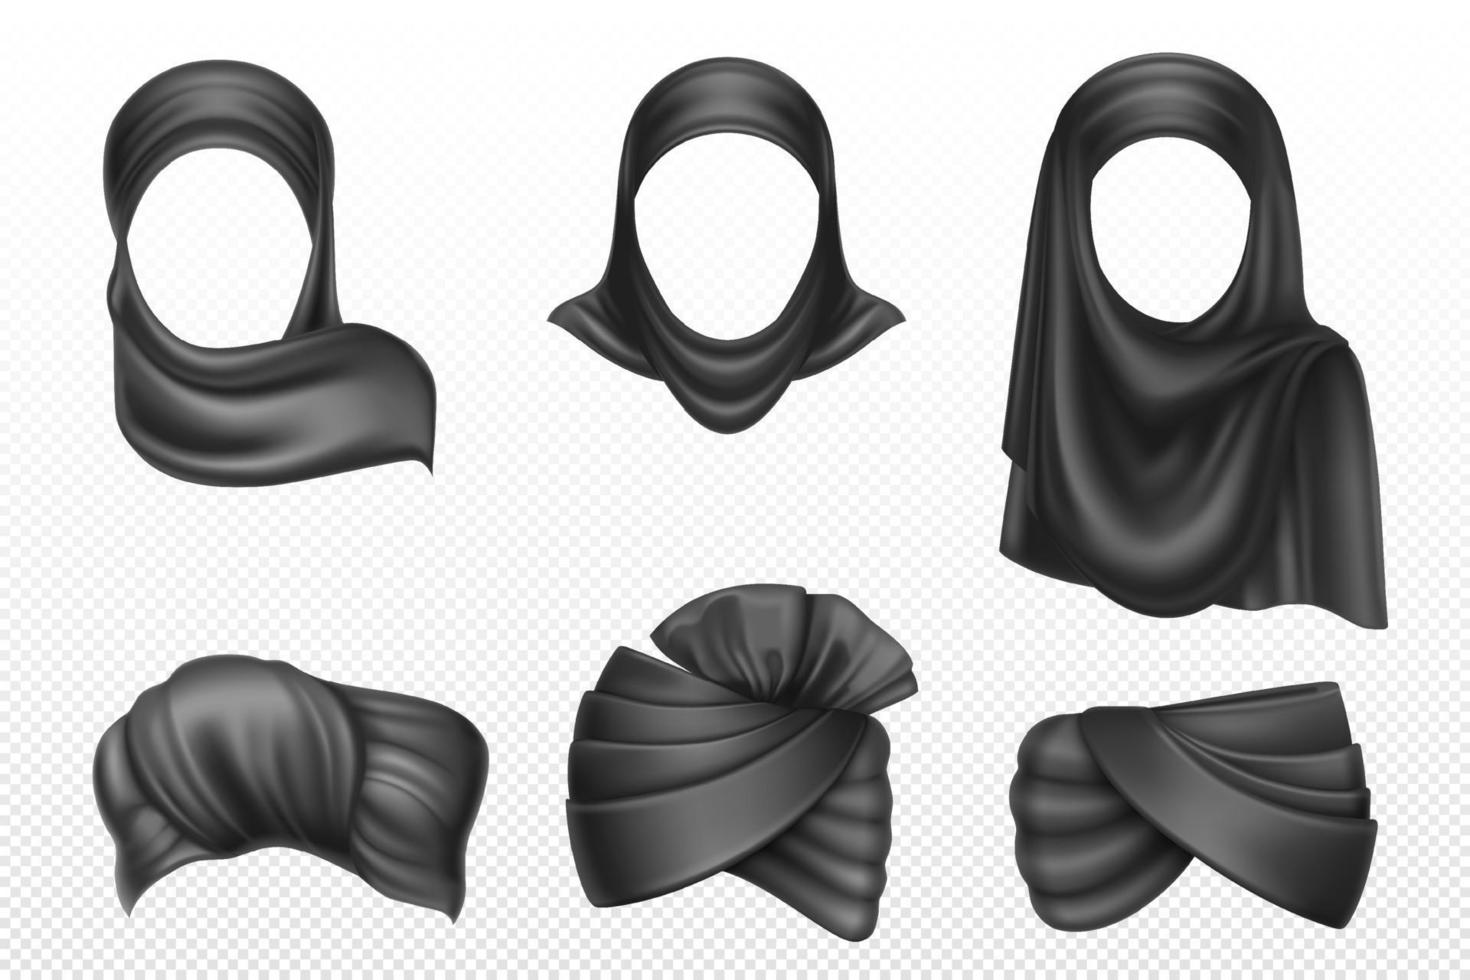 turbante preto e hijab, cocar indiano e árabe vetor